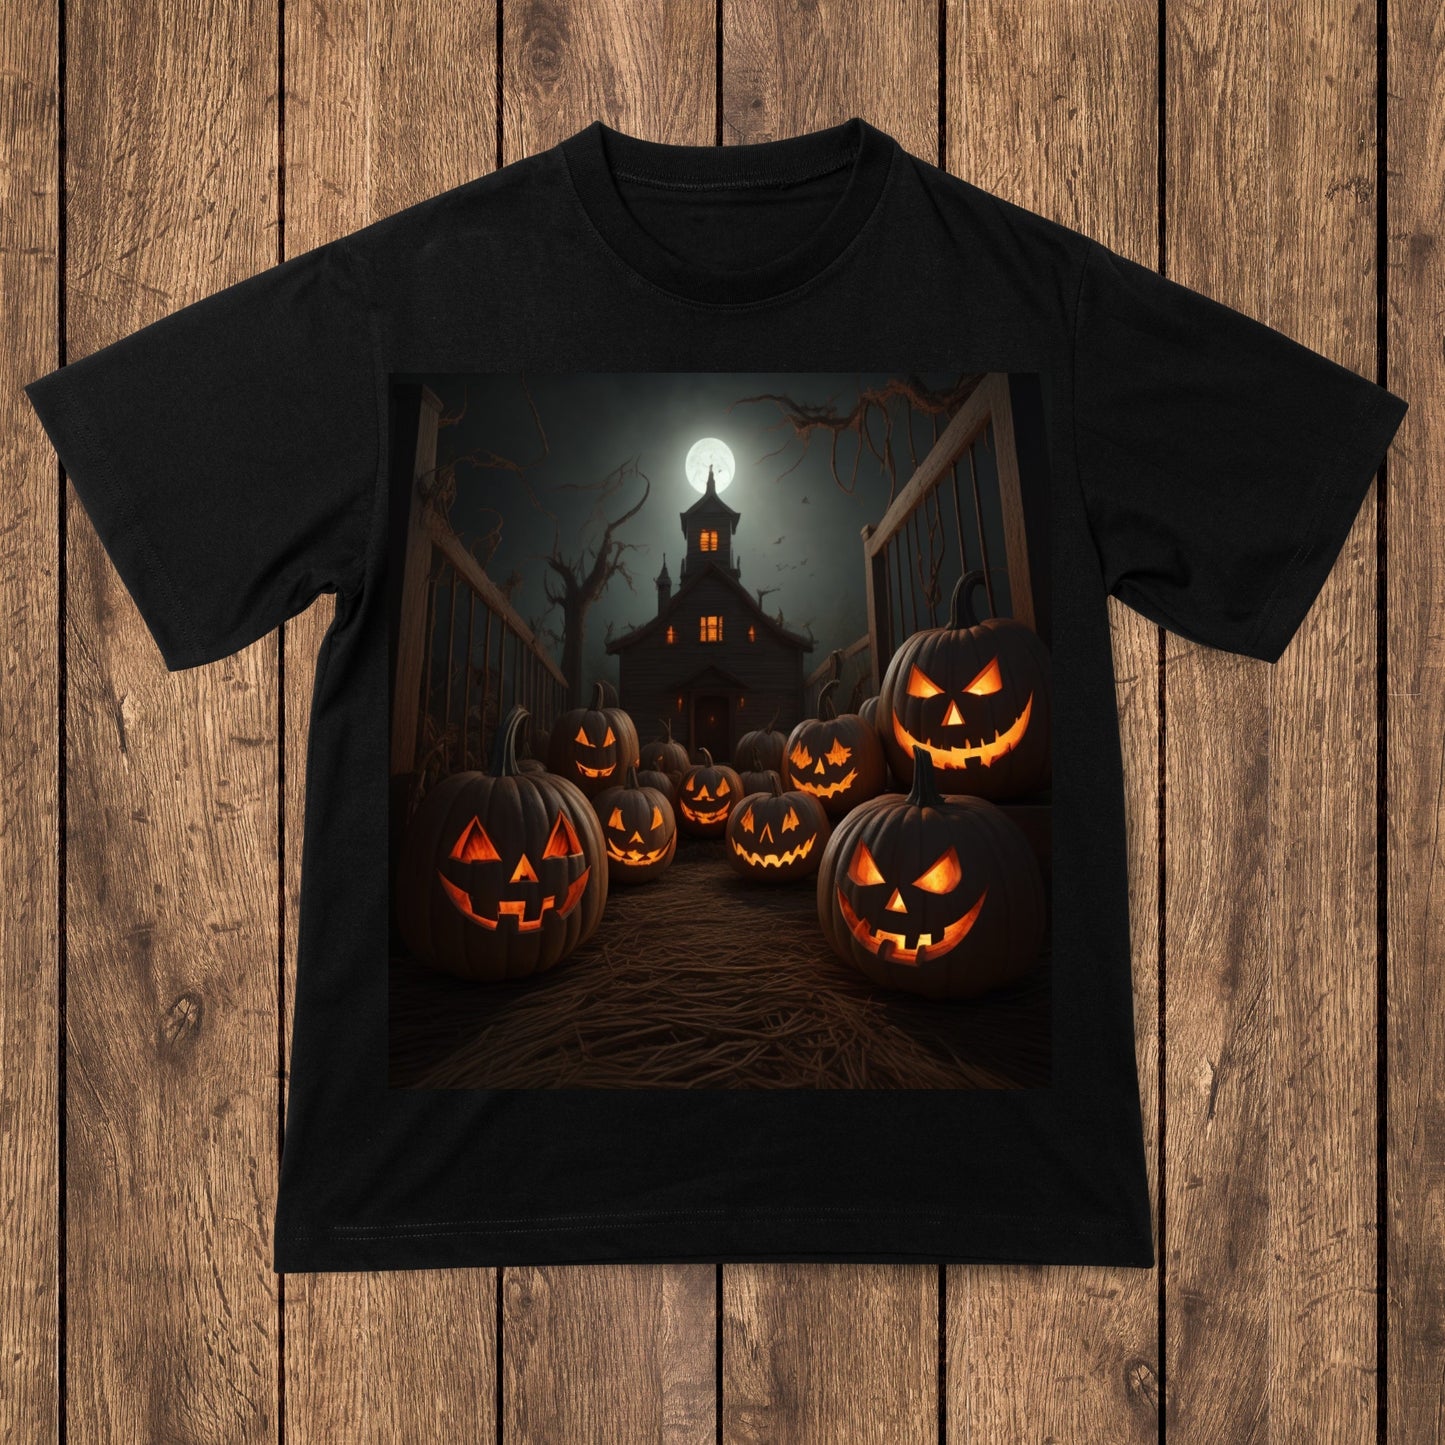 Creepy pumpkins - Horror Halloween t-shirt - Premium t-shirt from Lees Krazy Teez - Just $24.95! Shop now at Lees Krazy Teez